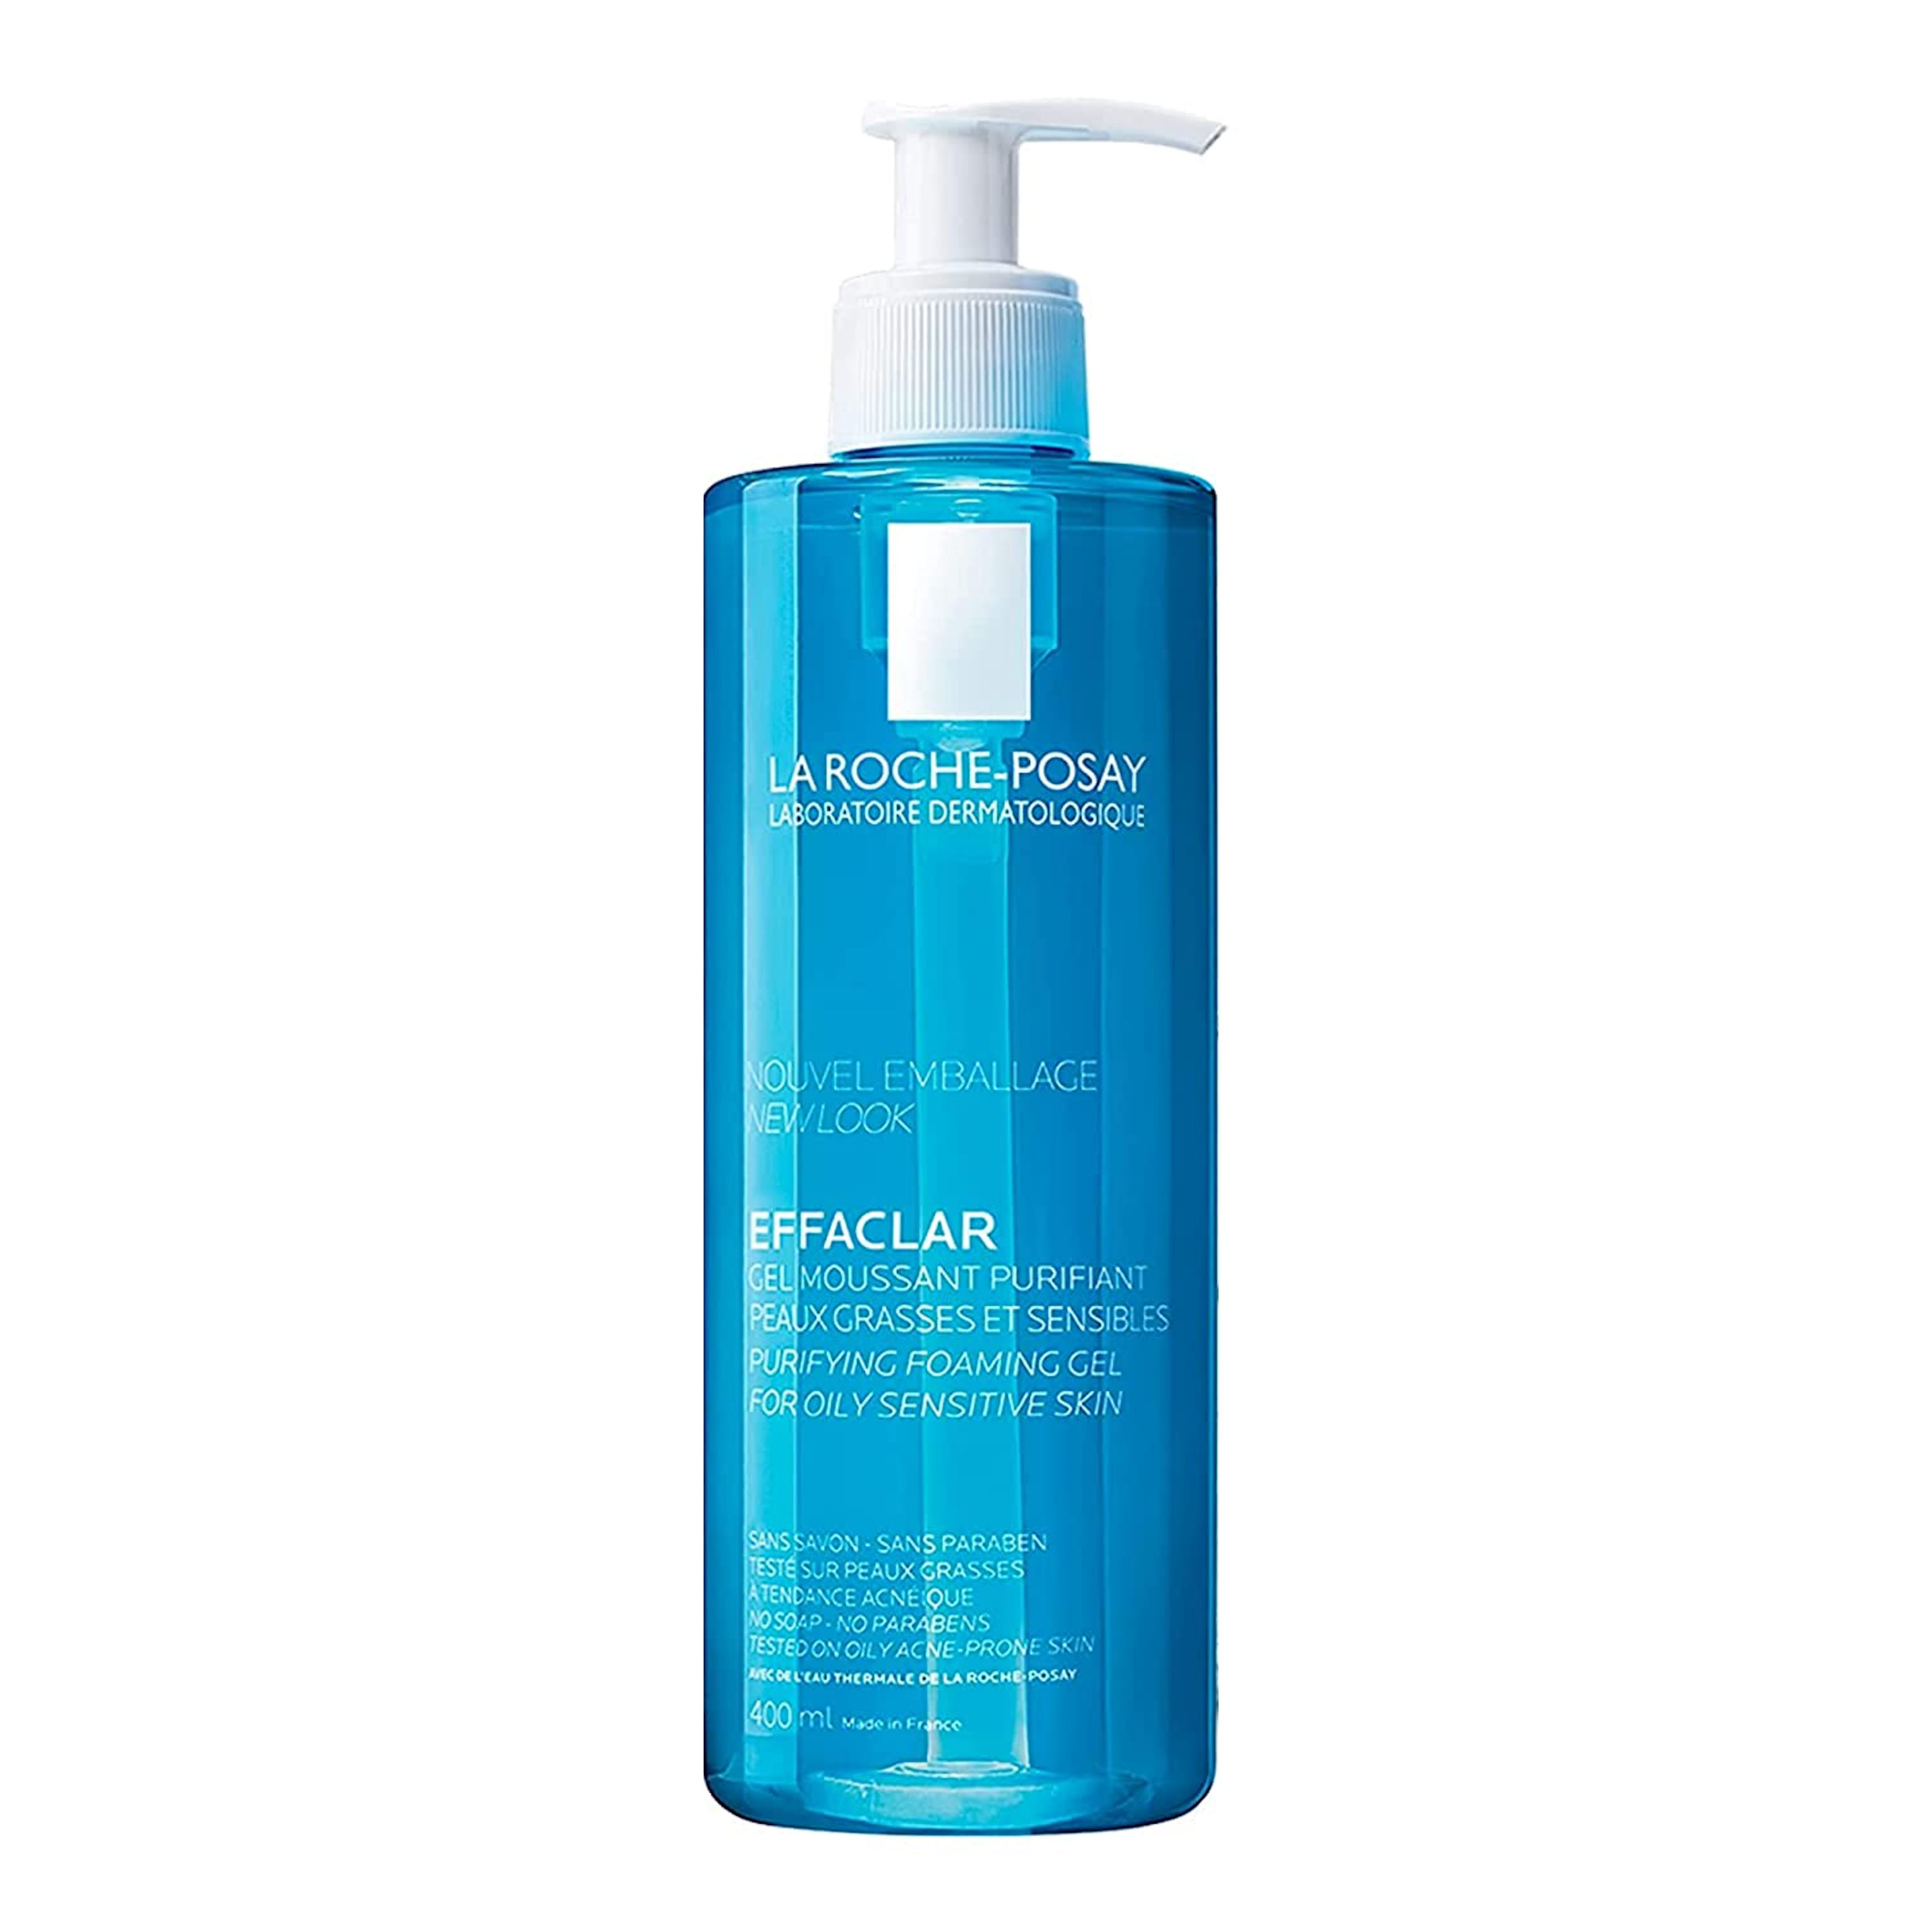 La Roche-Posay Effaclar Purifying Foaming Gel Cleanser for Oily Skin 13.5 fl. oz (400ml) - image 1 of 2